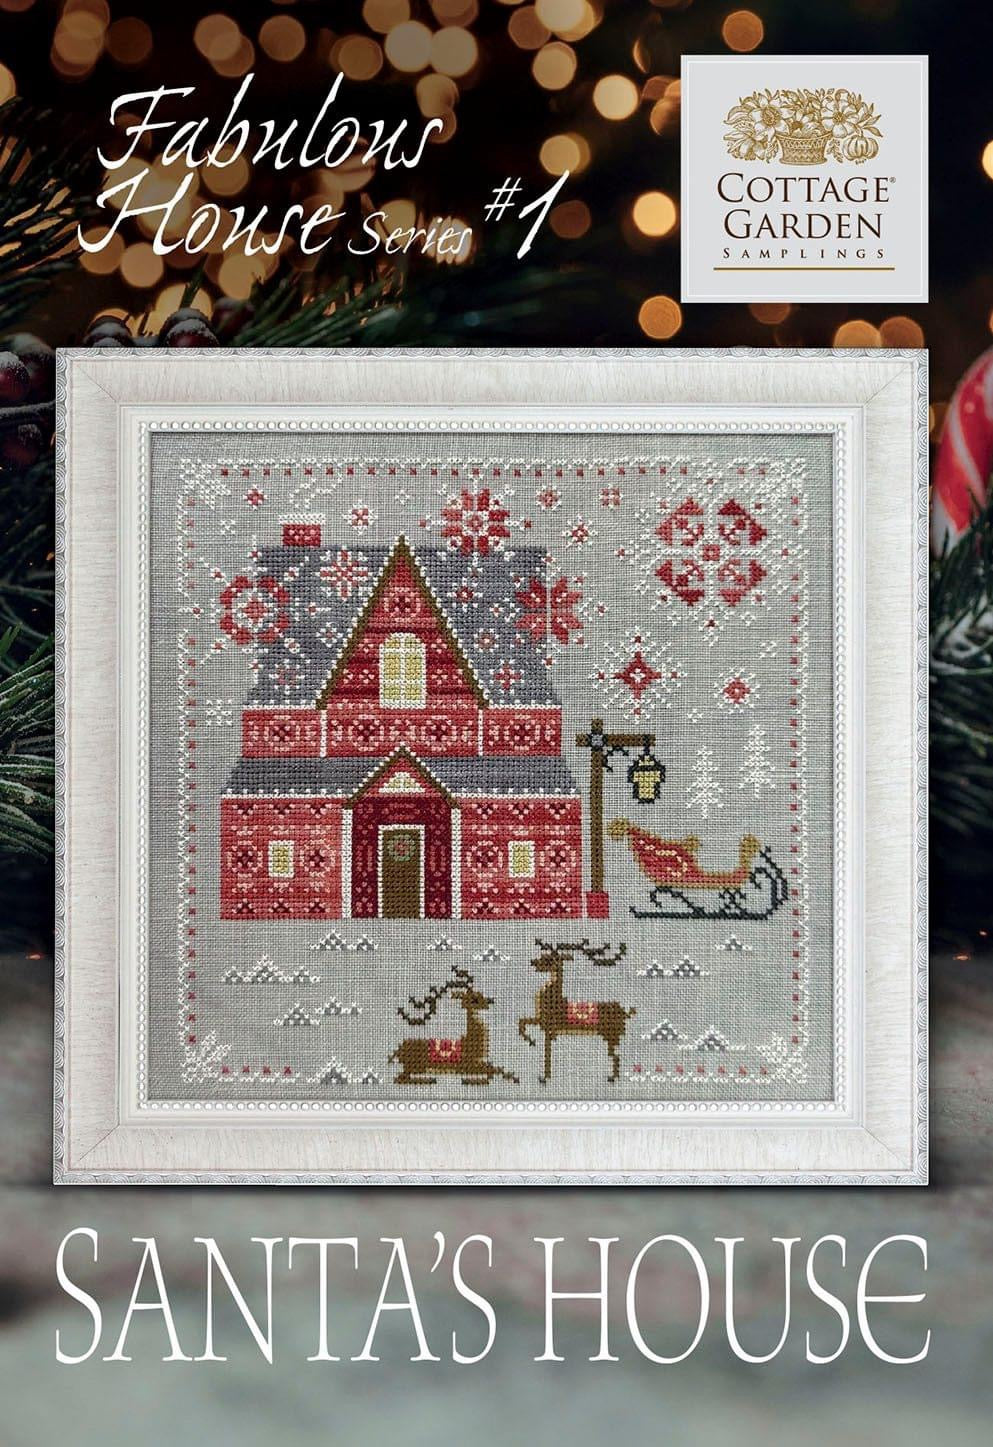 Santa's House - Fabulous House Series #1 - Cottage Garden Samplings - Cross Stitch Pattern, Needlecraft Patterns, Needlecraft Patterns, The Crafty Grimalkin - A Cross Stitch Store